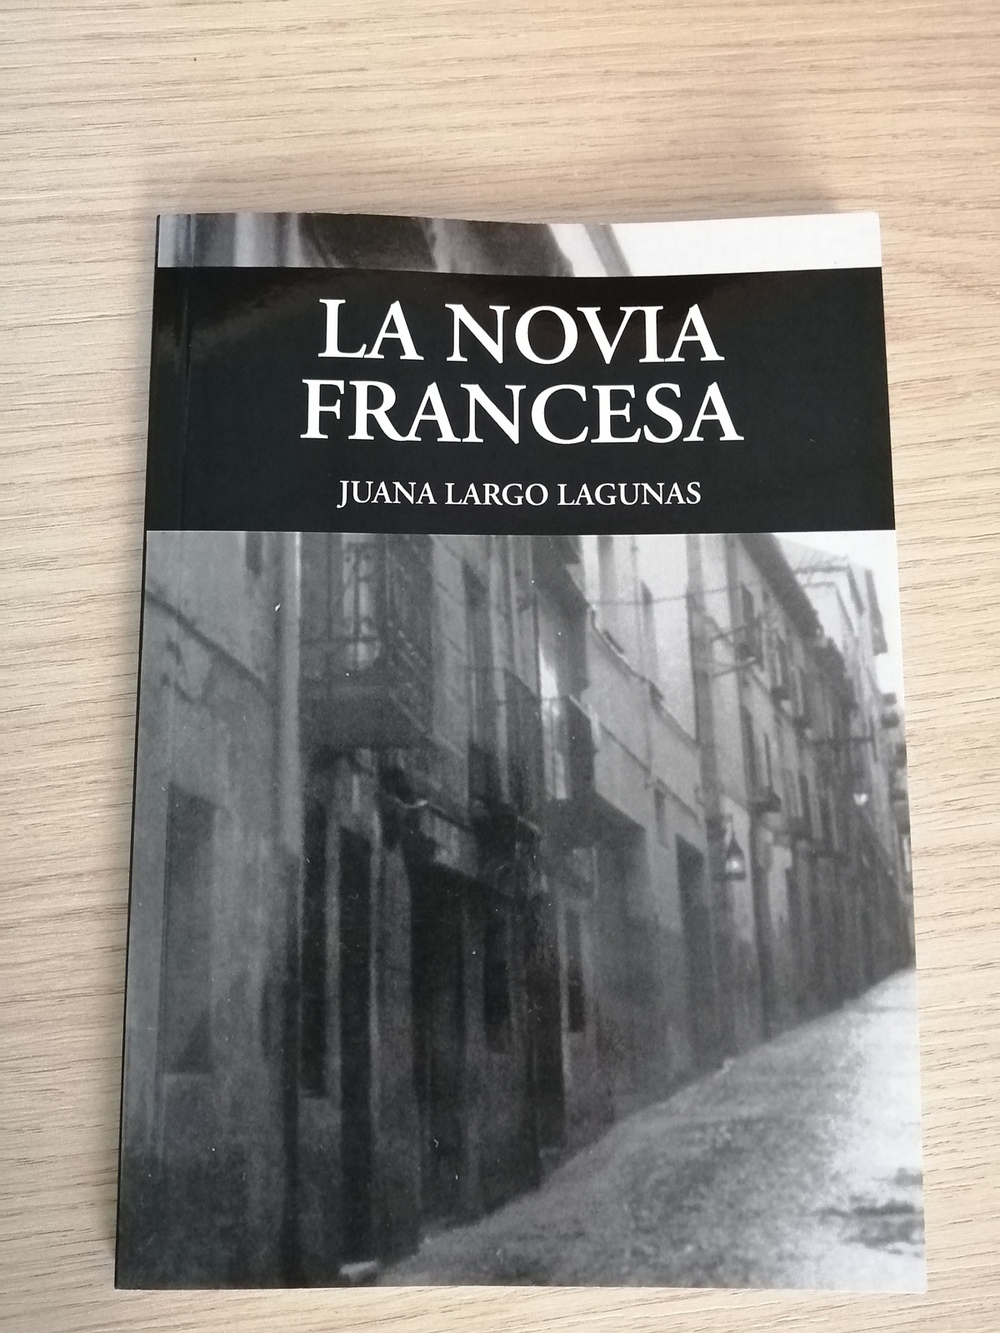 Juana Largo publica su nueva obra literaria, 'La novia francesa'.